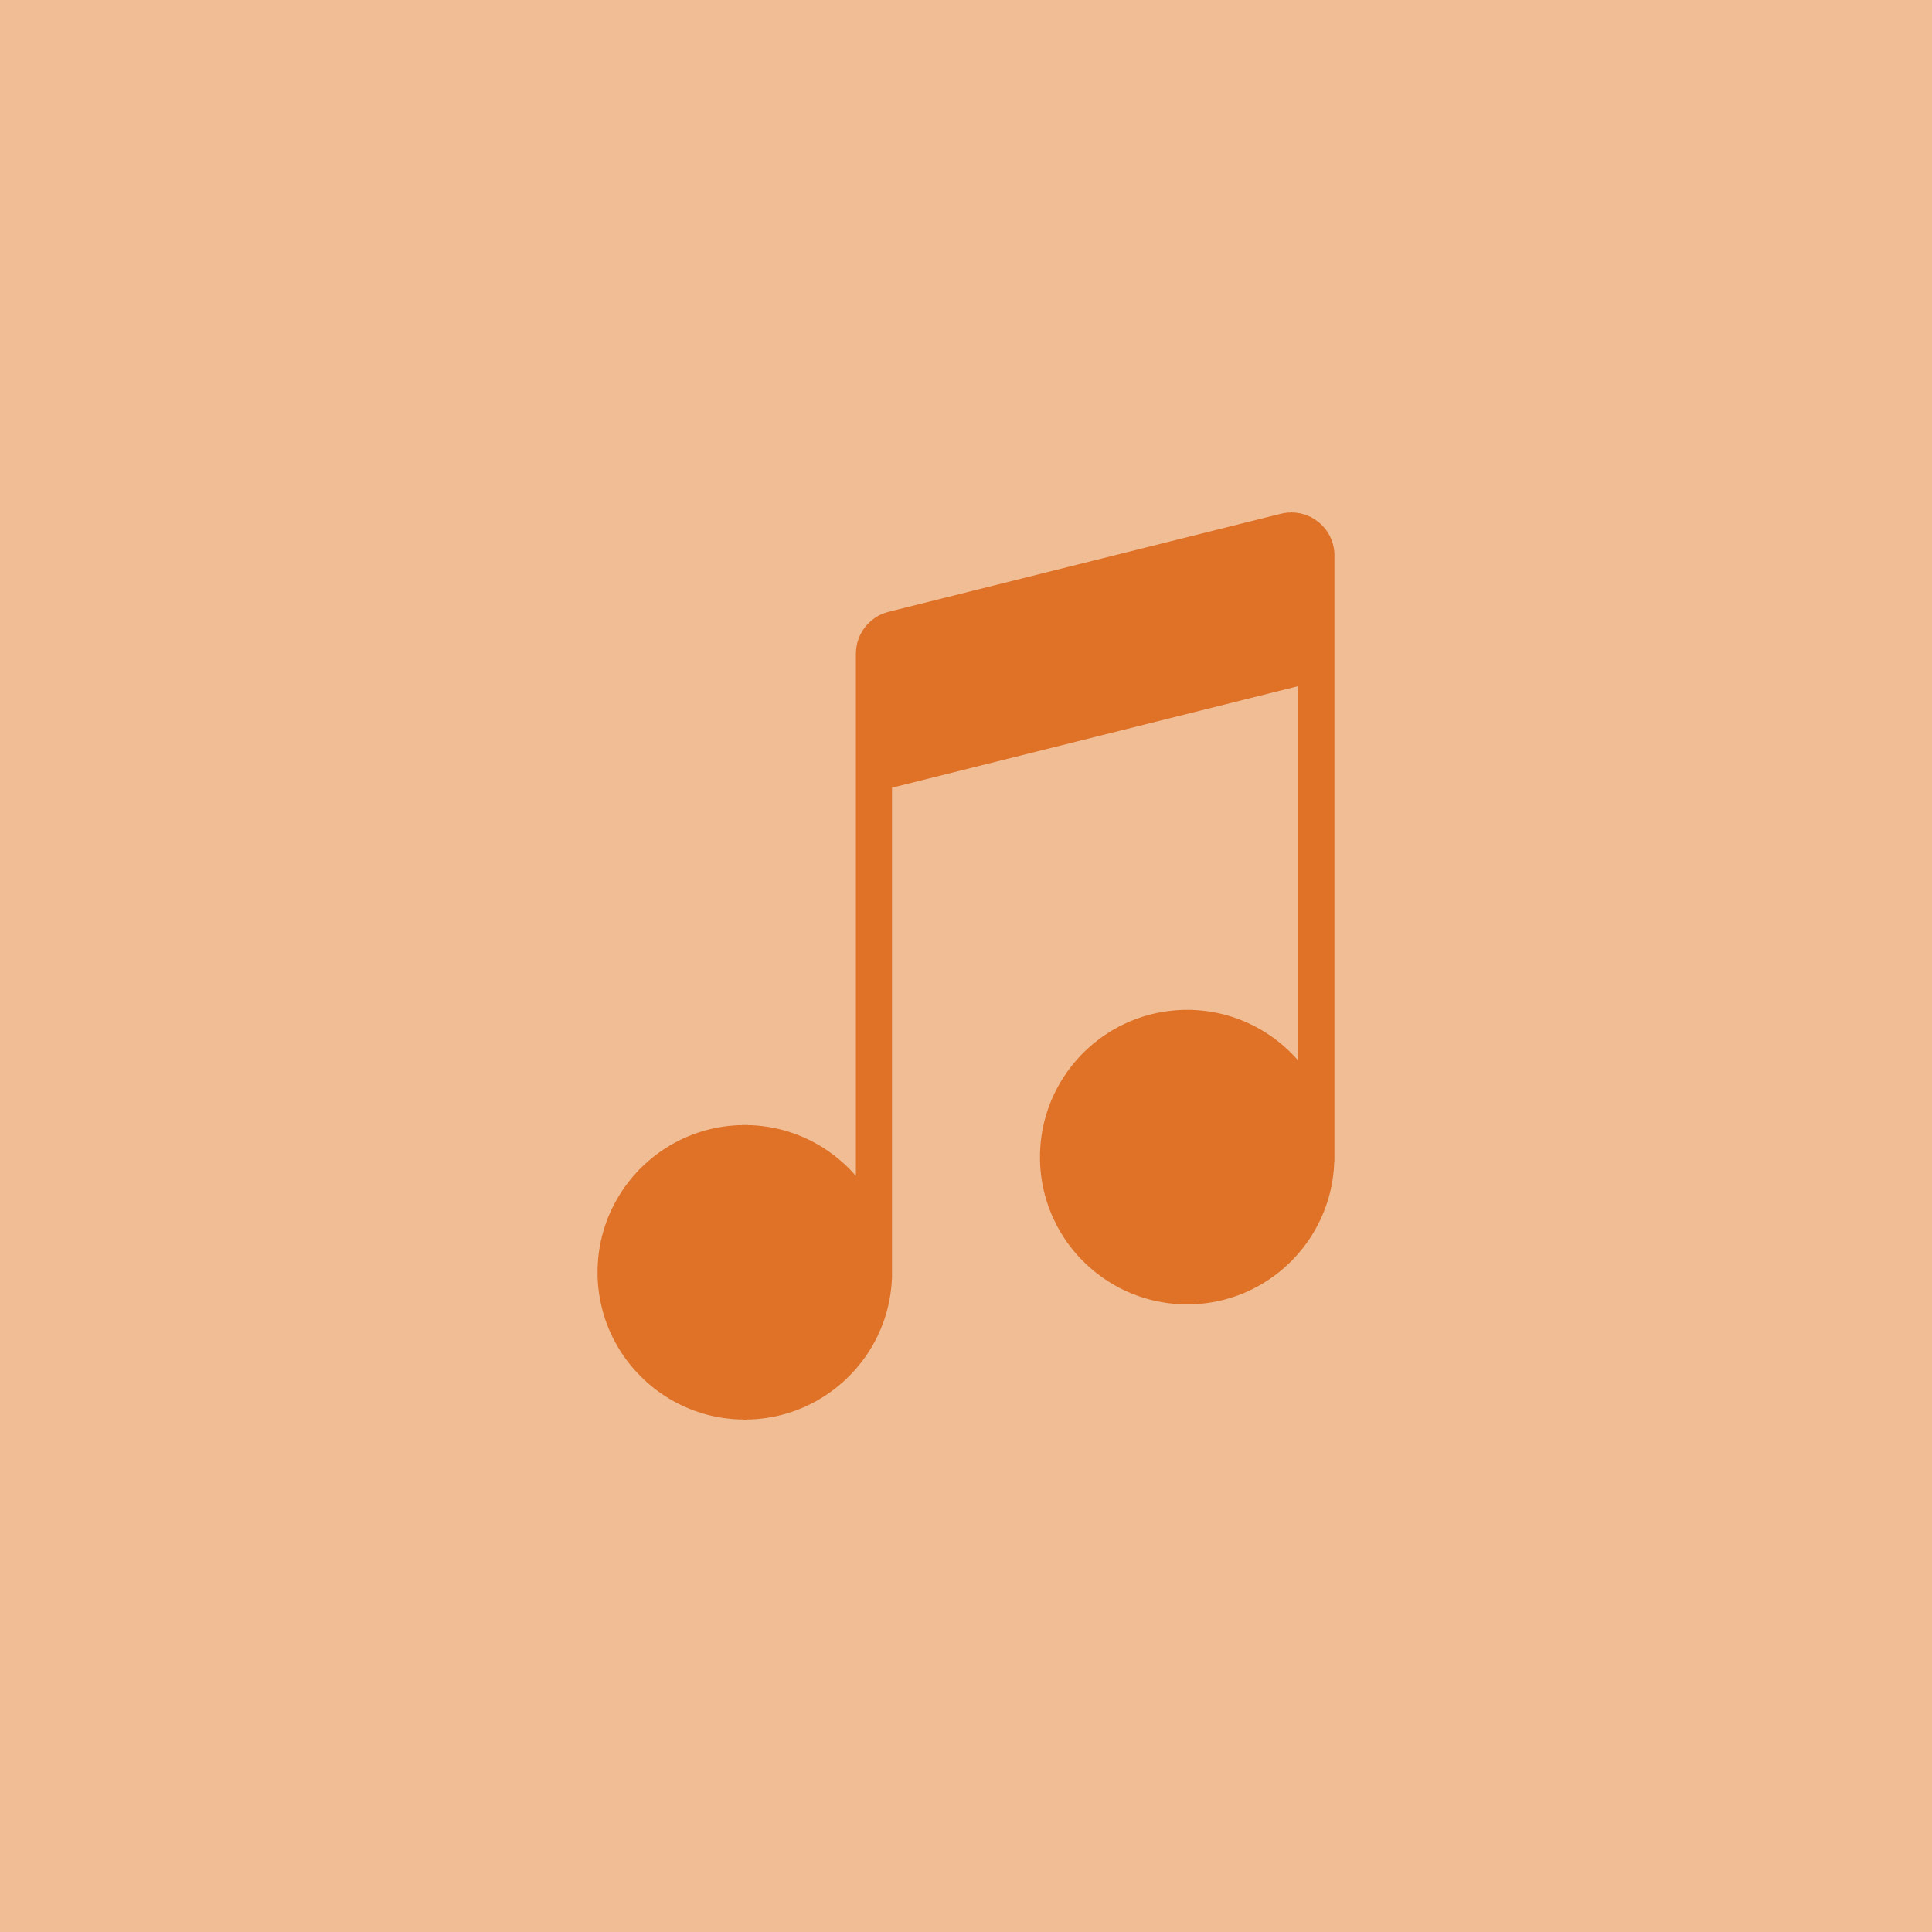 Orange graphic of music note